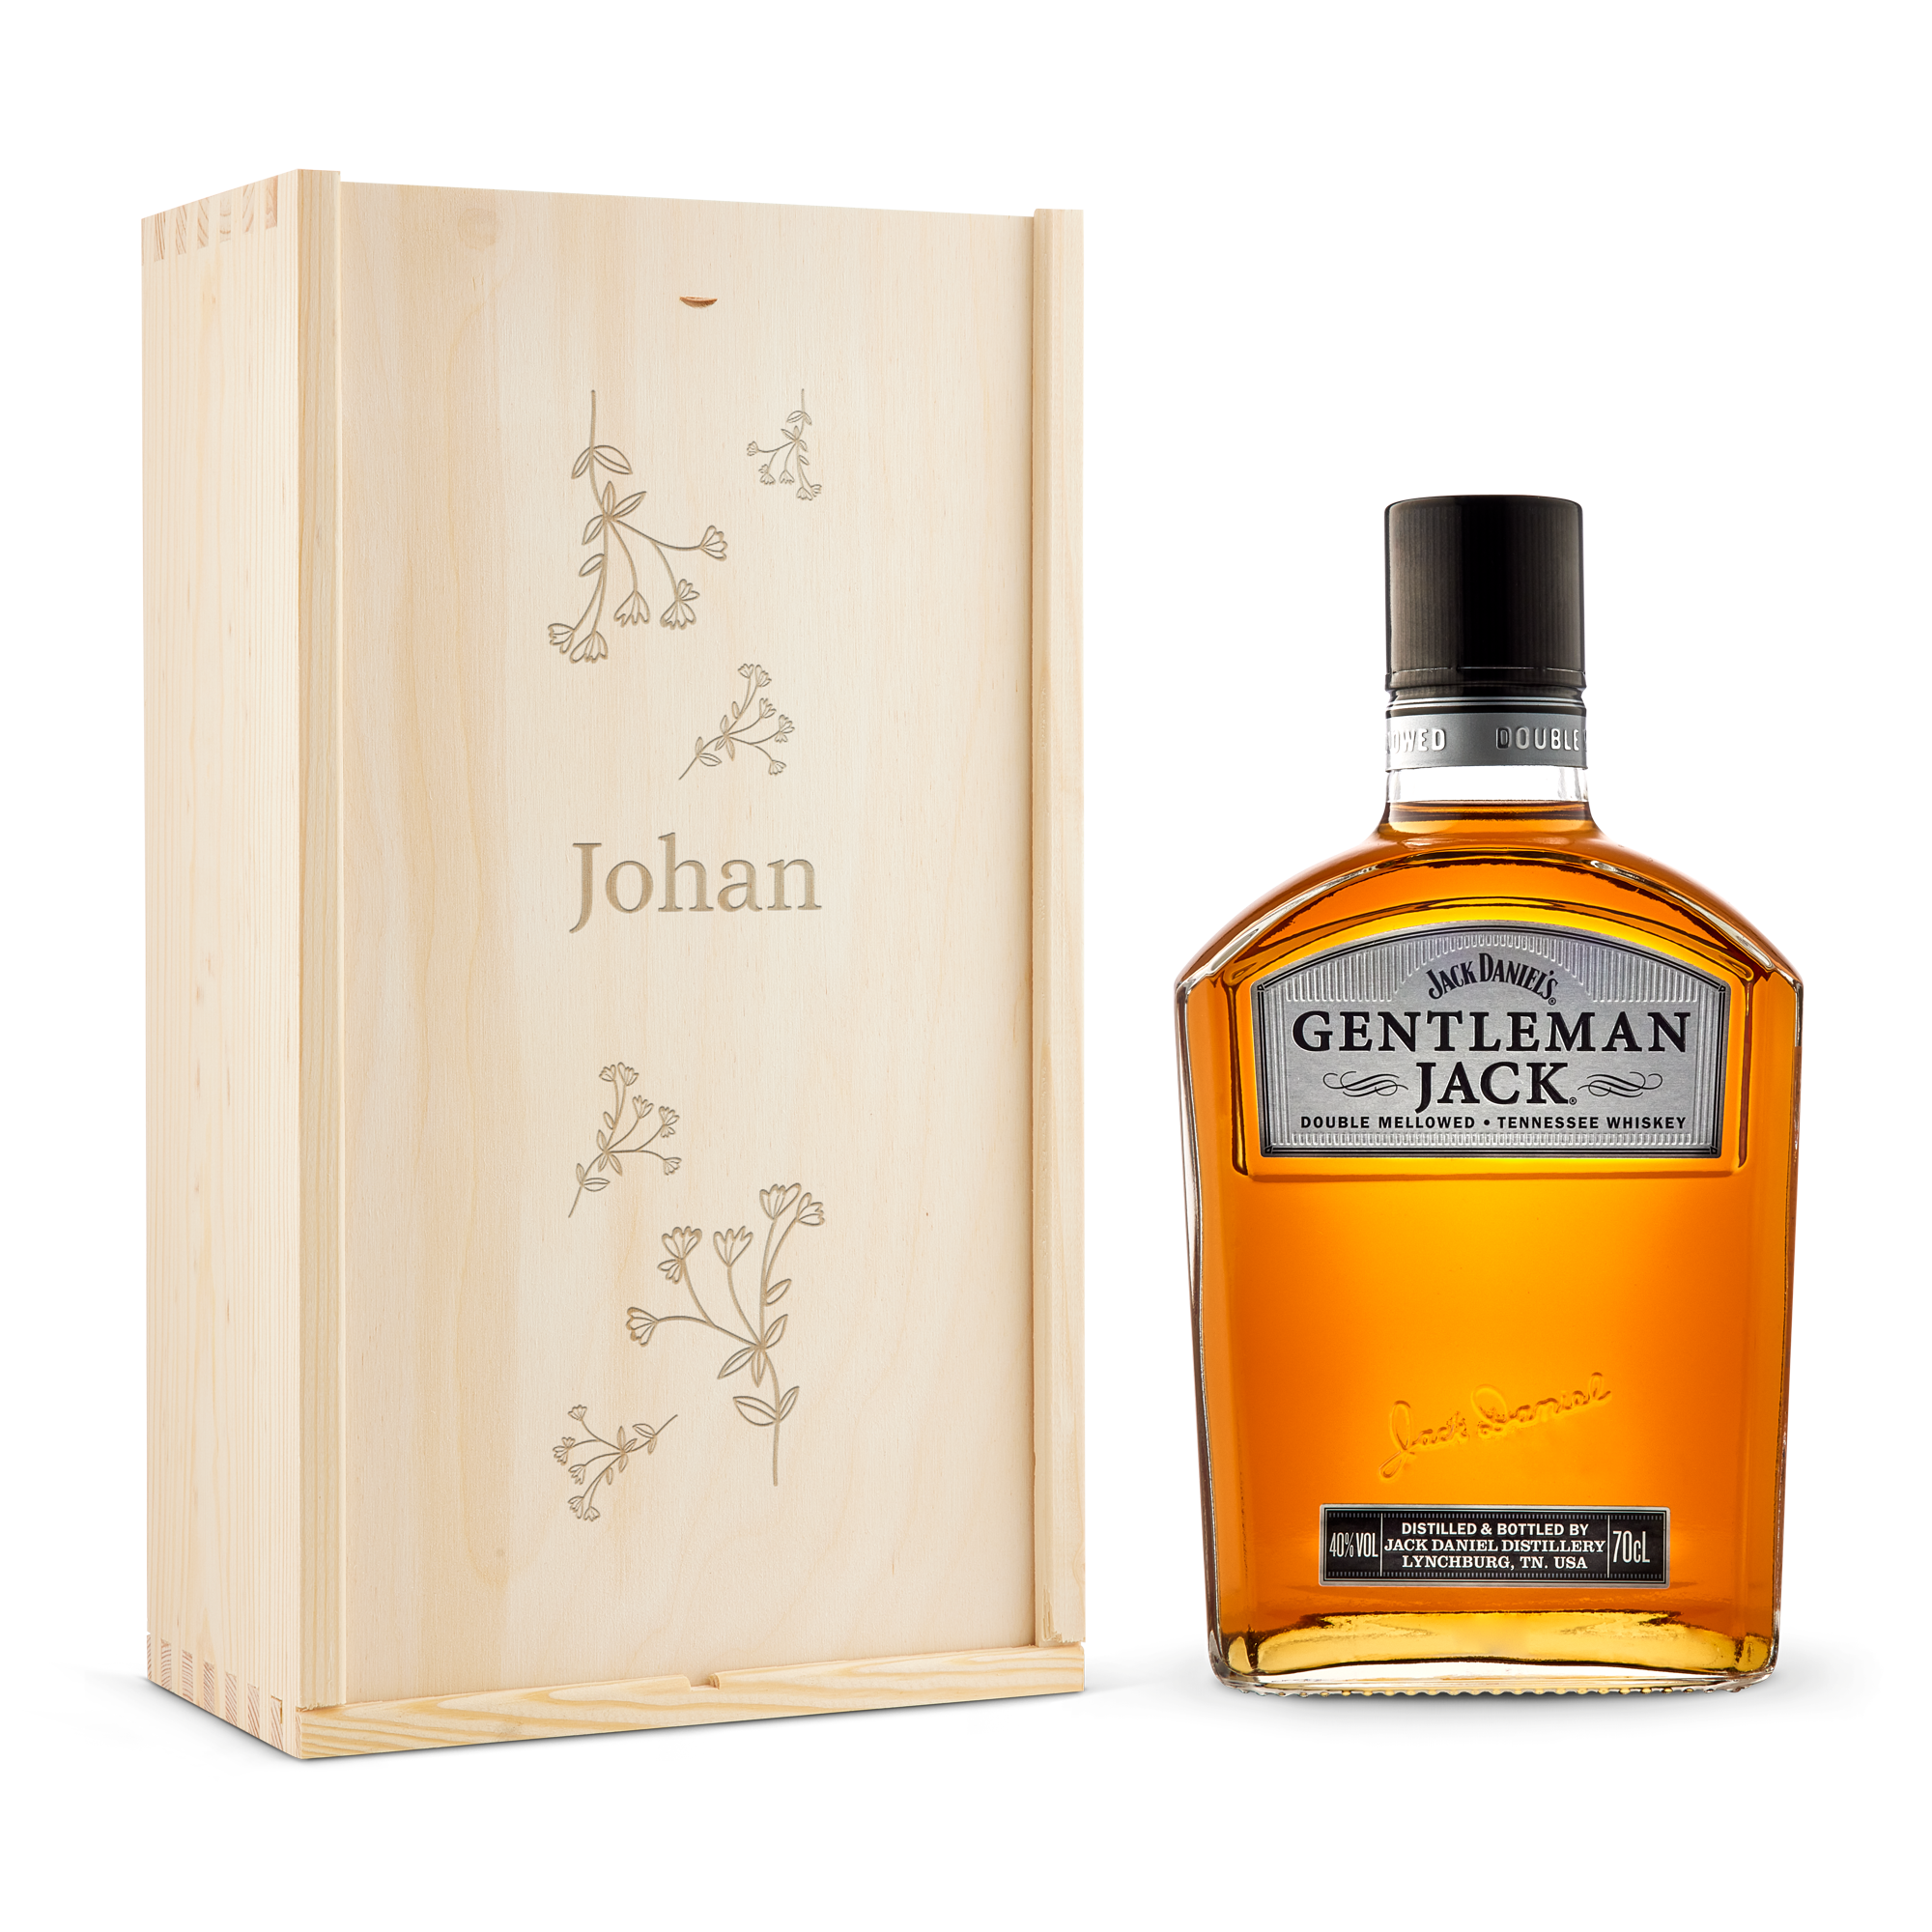 Jack Daniels Gentleman Jack Bourbon whisky i personlig träväska